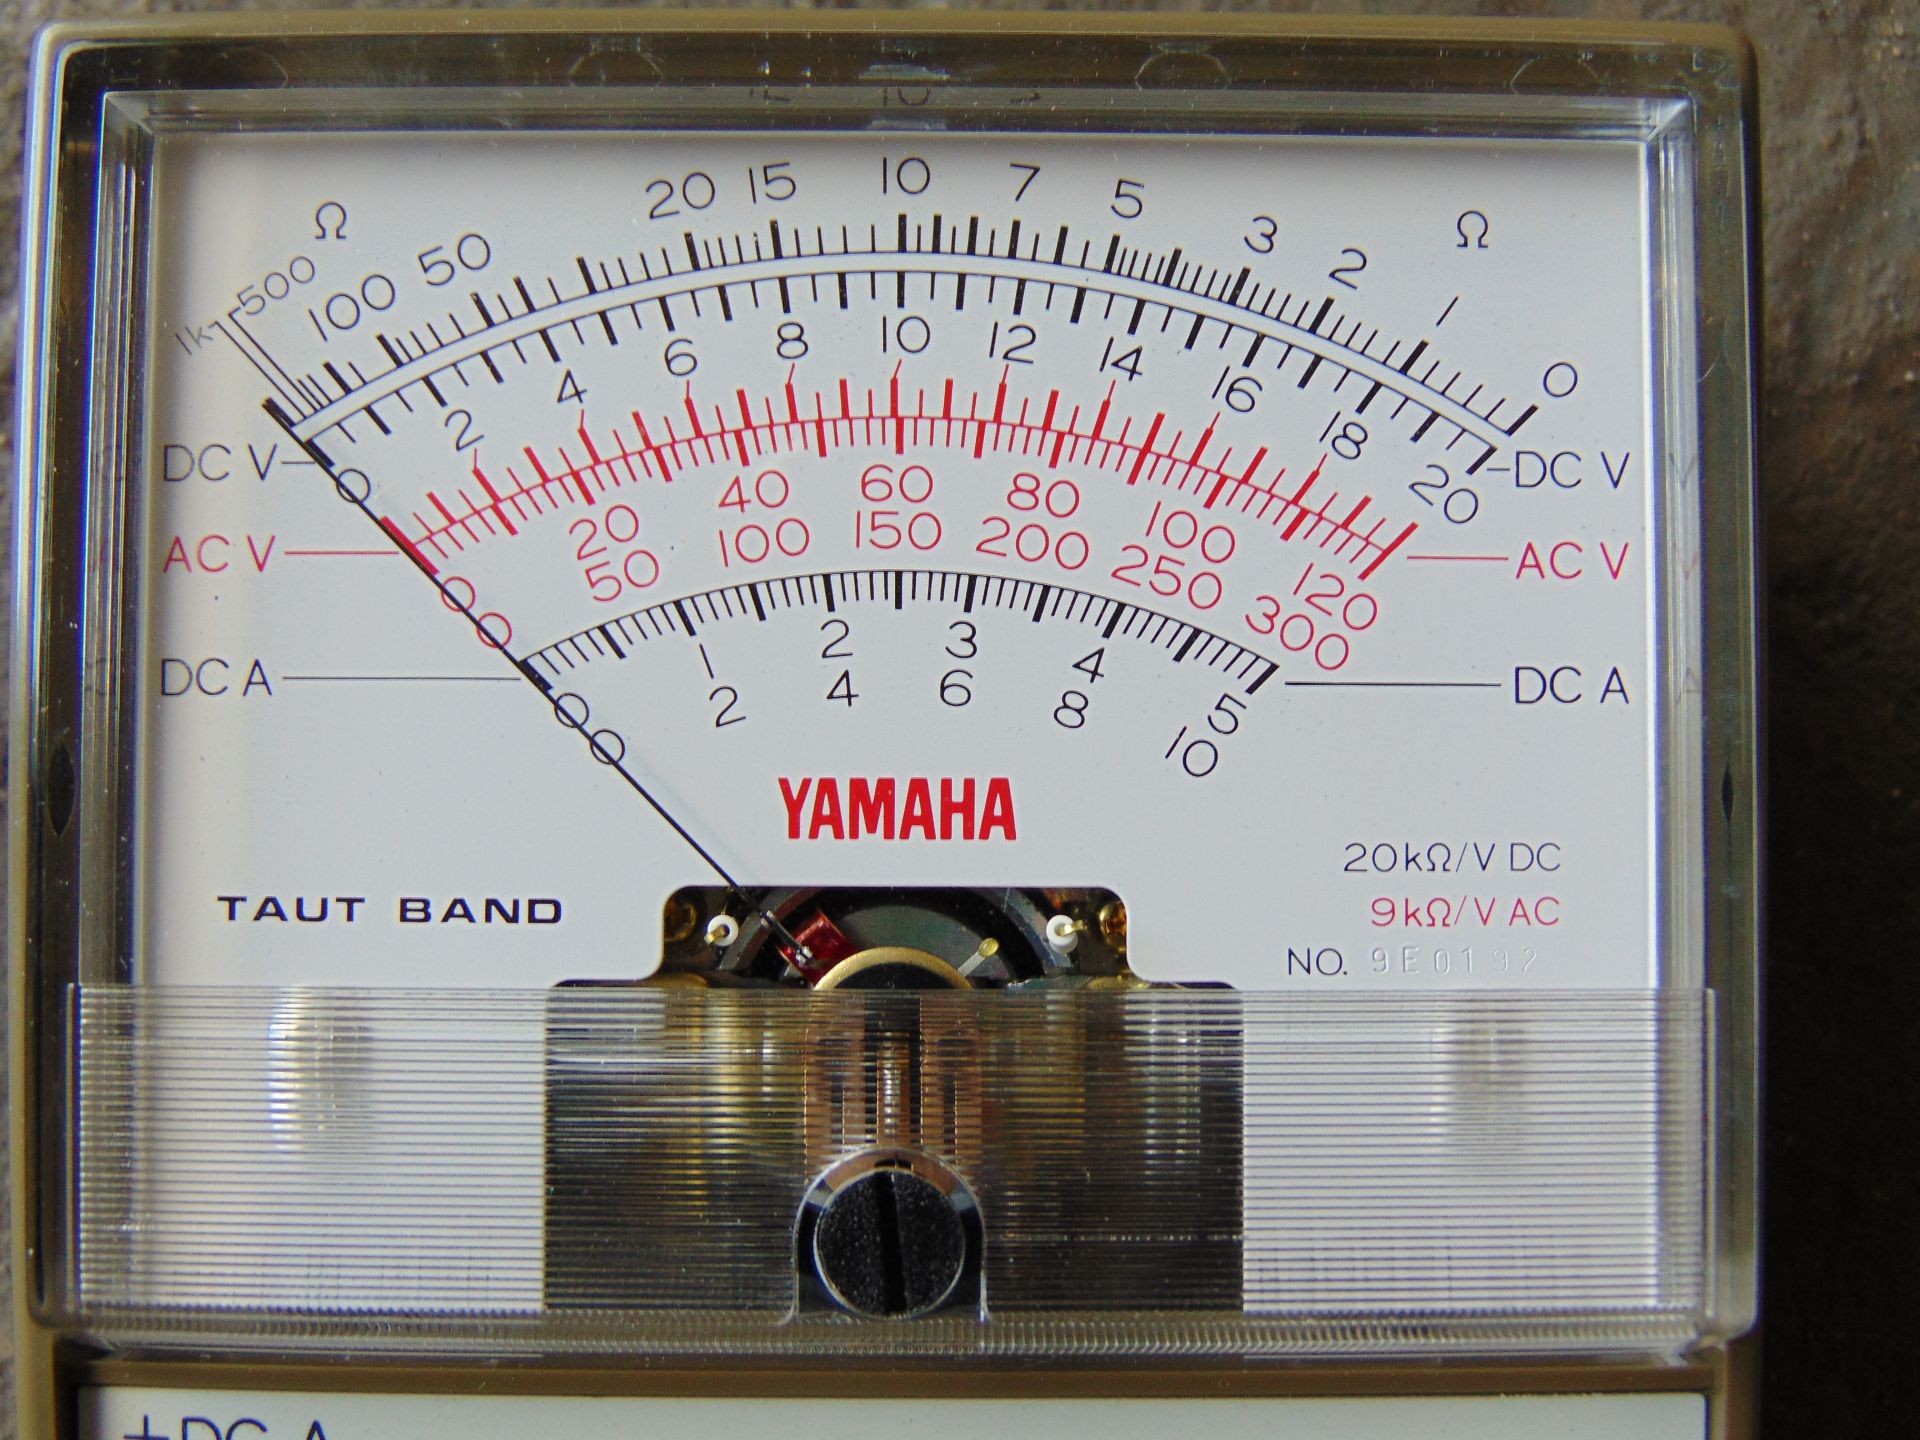 15 x Yamaha Pocket Testers/Mulitimeters P/no 90890-03112 - Image 4 of 6